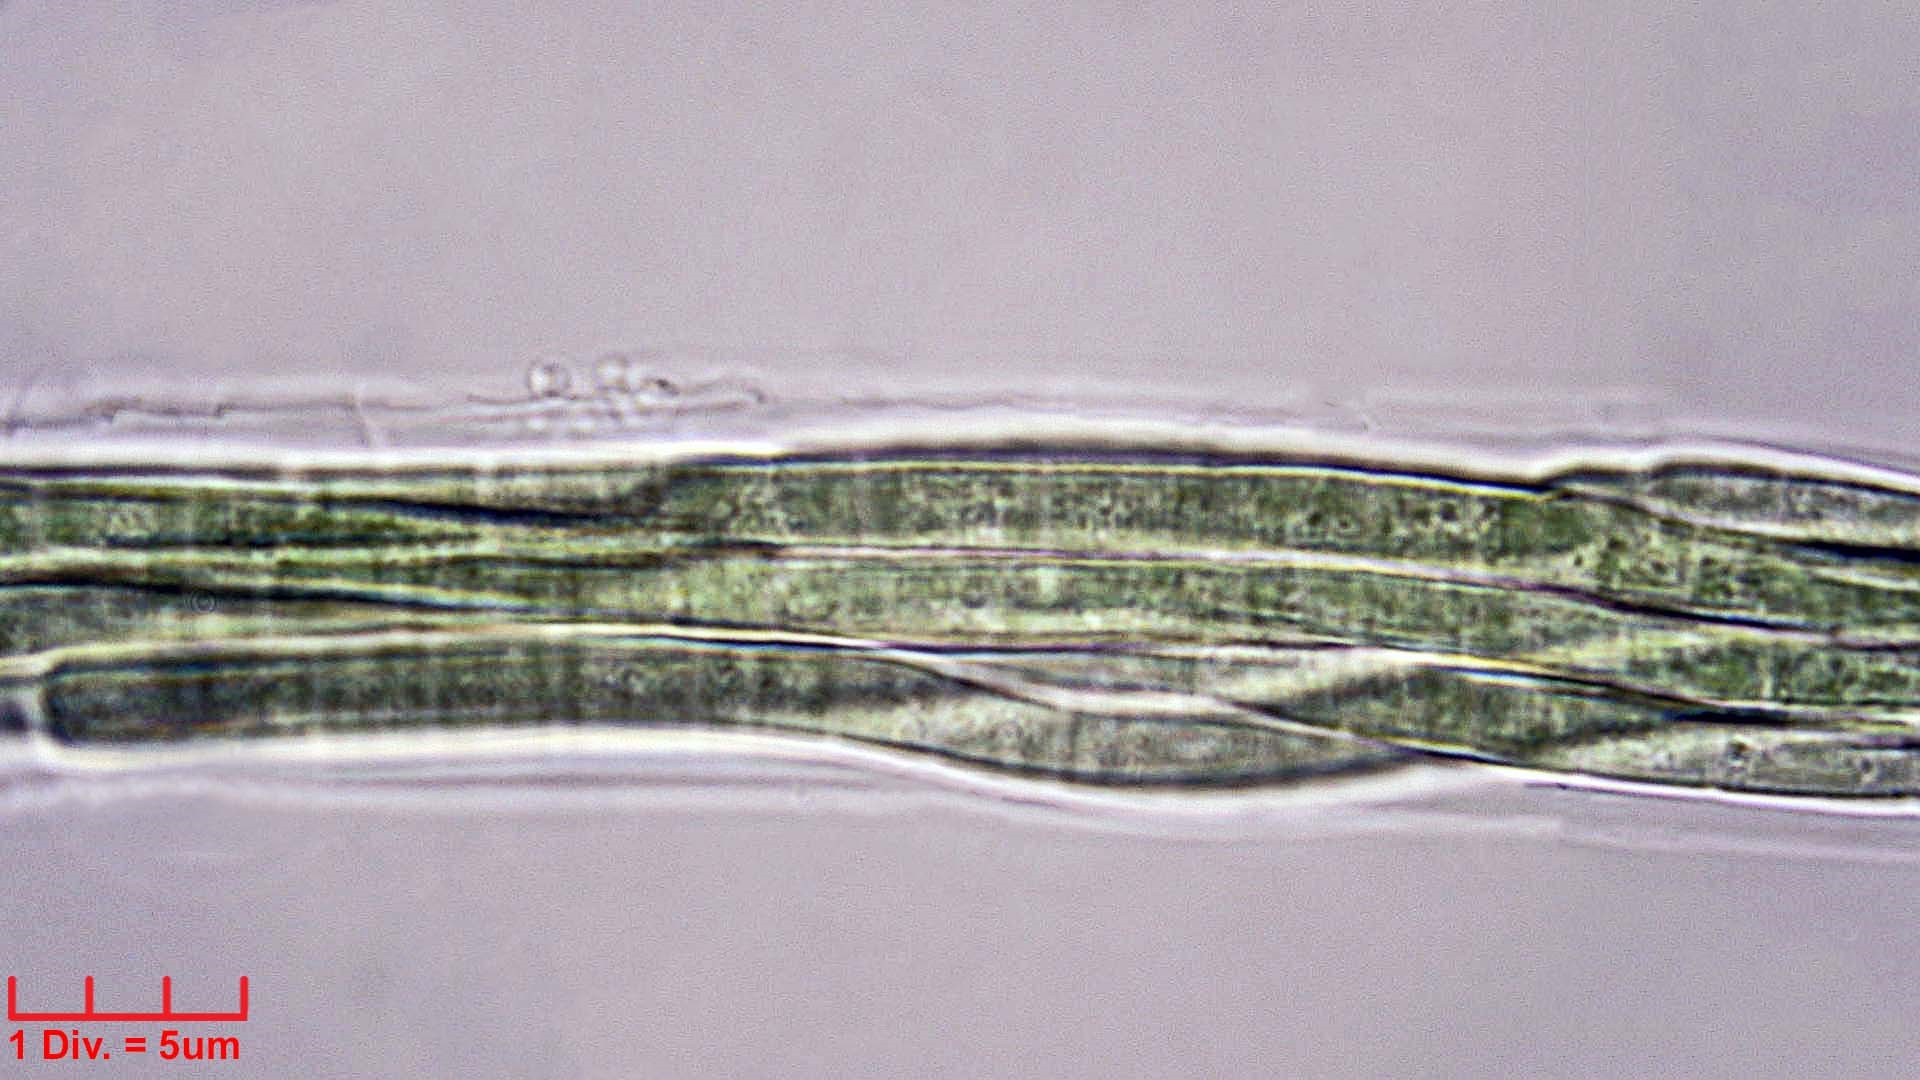 Cyanobacteria/Oscillatoriales/Microcoleaceae/Microcoleus/paludosus/microcoleus-paludosus-267.jpg